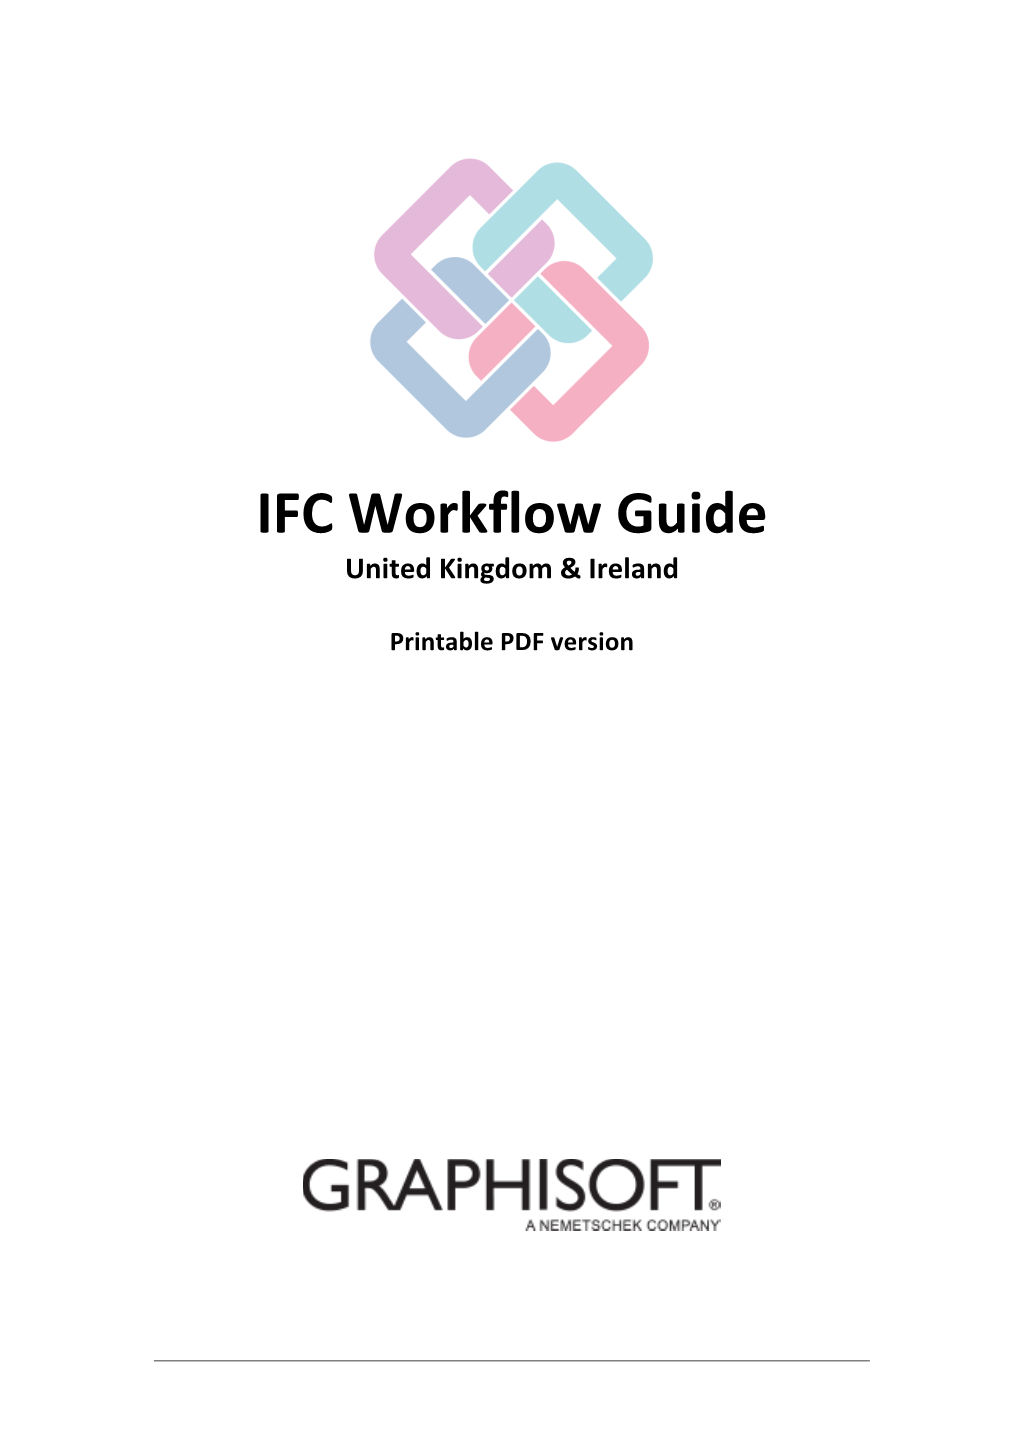 IFC Workflow Guide United Kingdom & Ireland